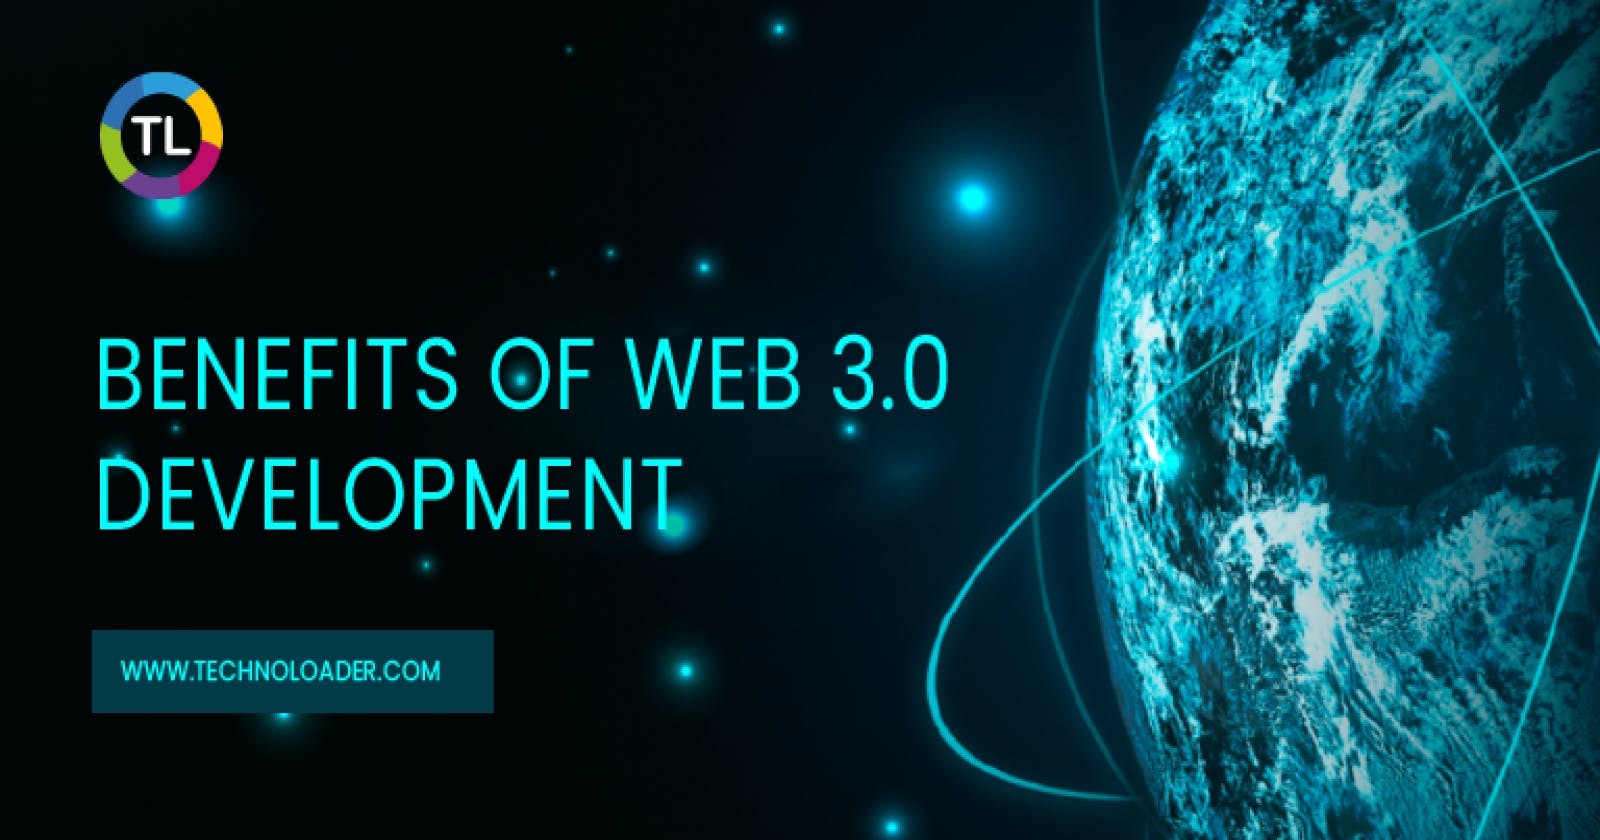 Benefits of Web 3.0 Development